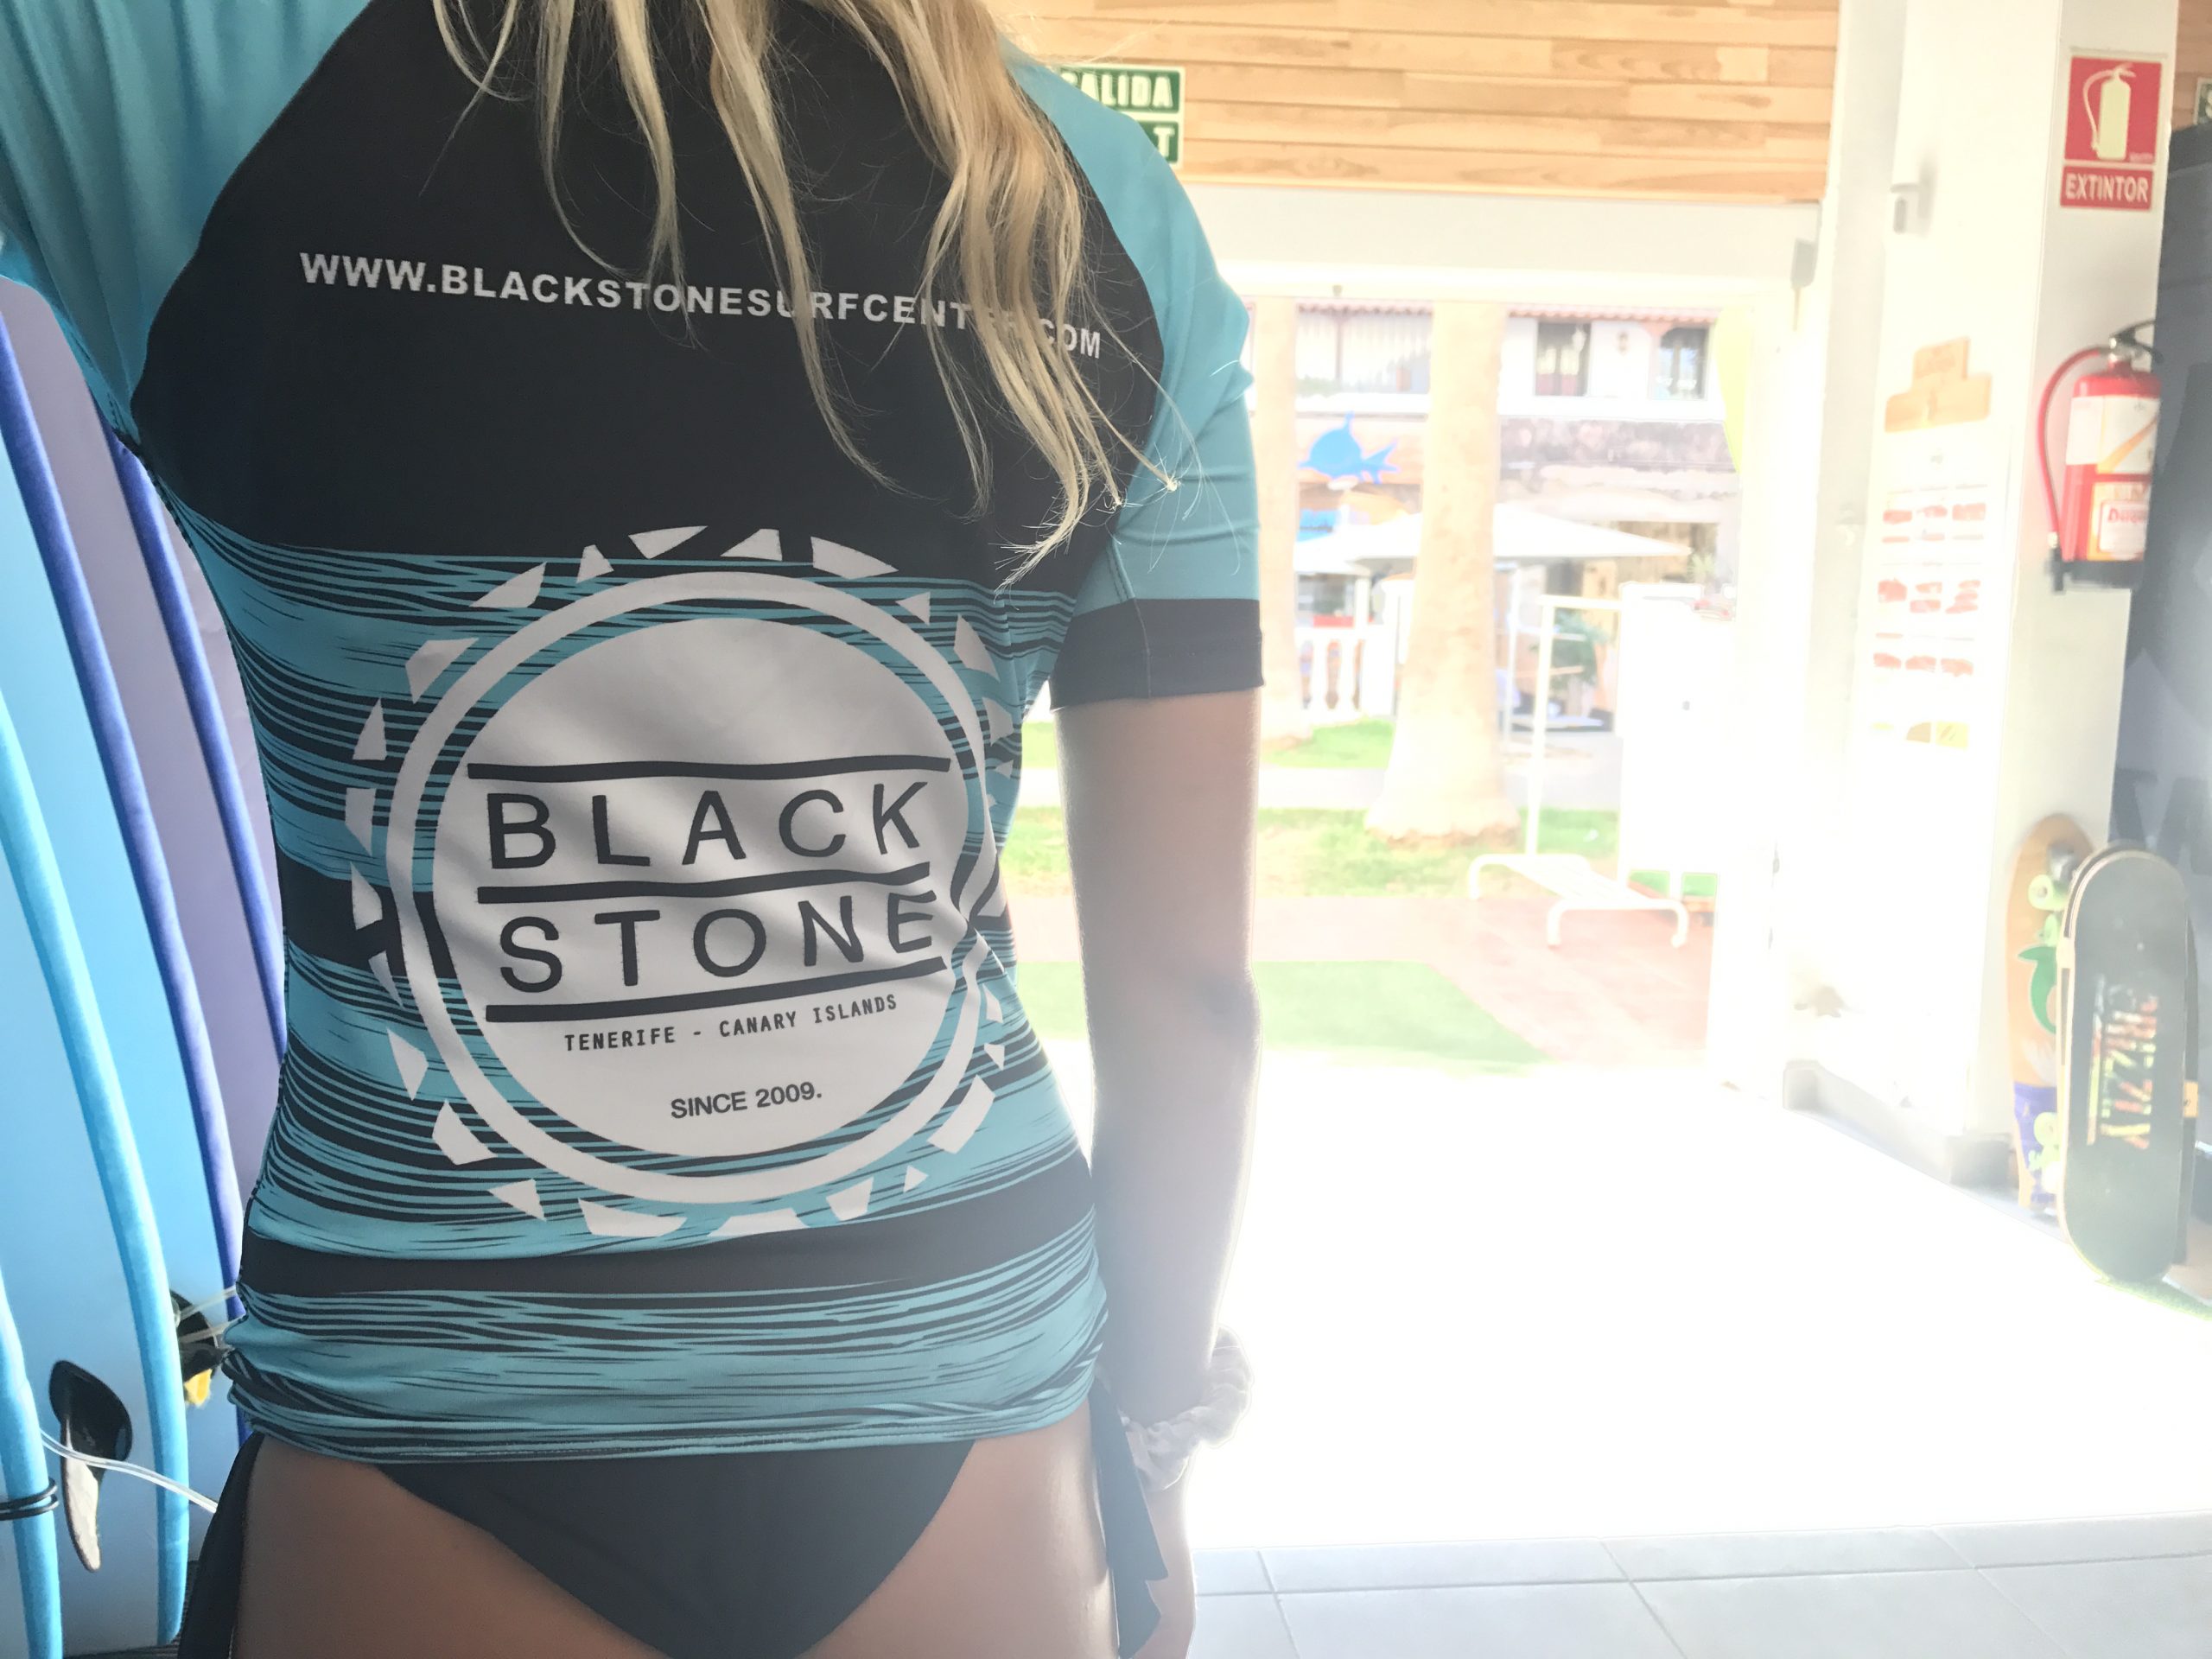 Blackstone Surf Center T-shirt in Tenerife in Playa las Américas